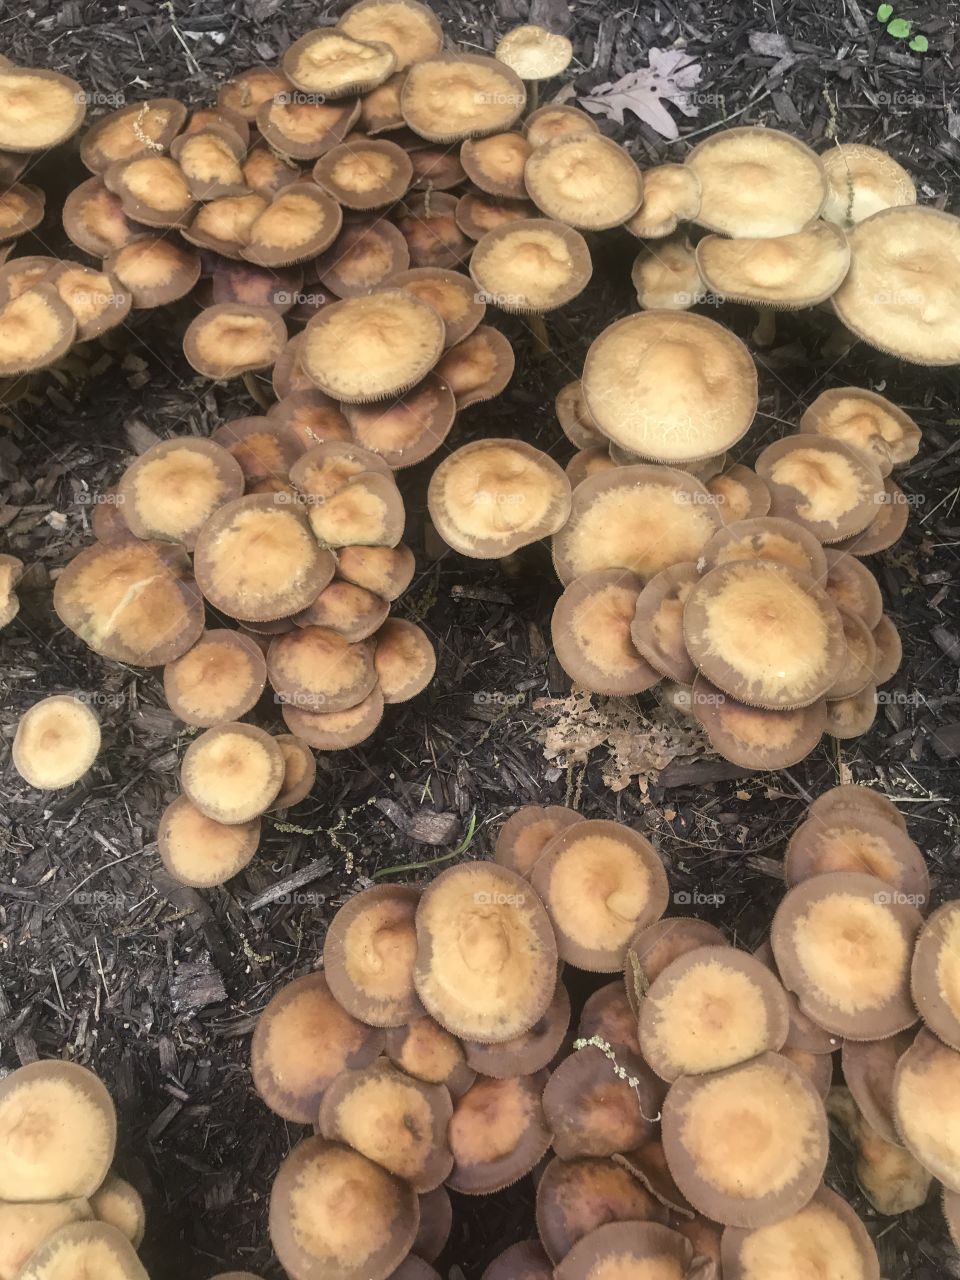 Mushrooms and more mushrooms 